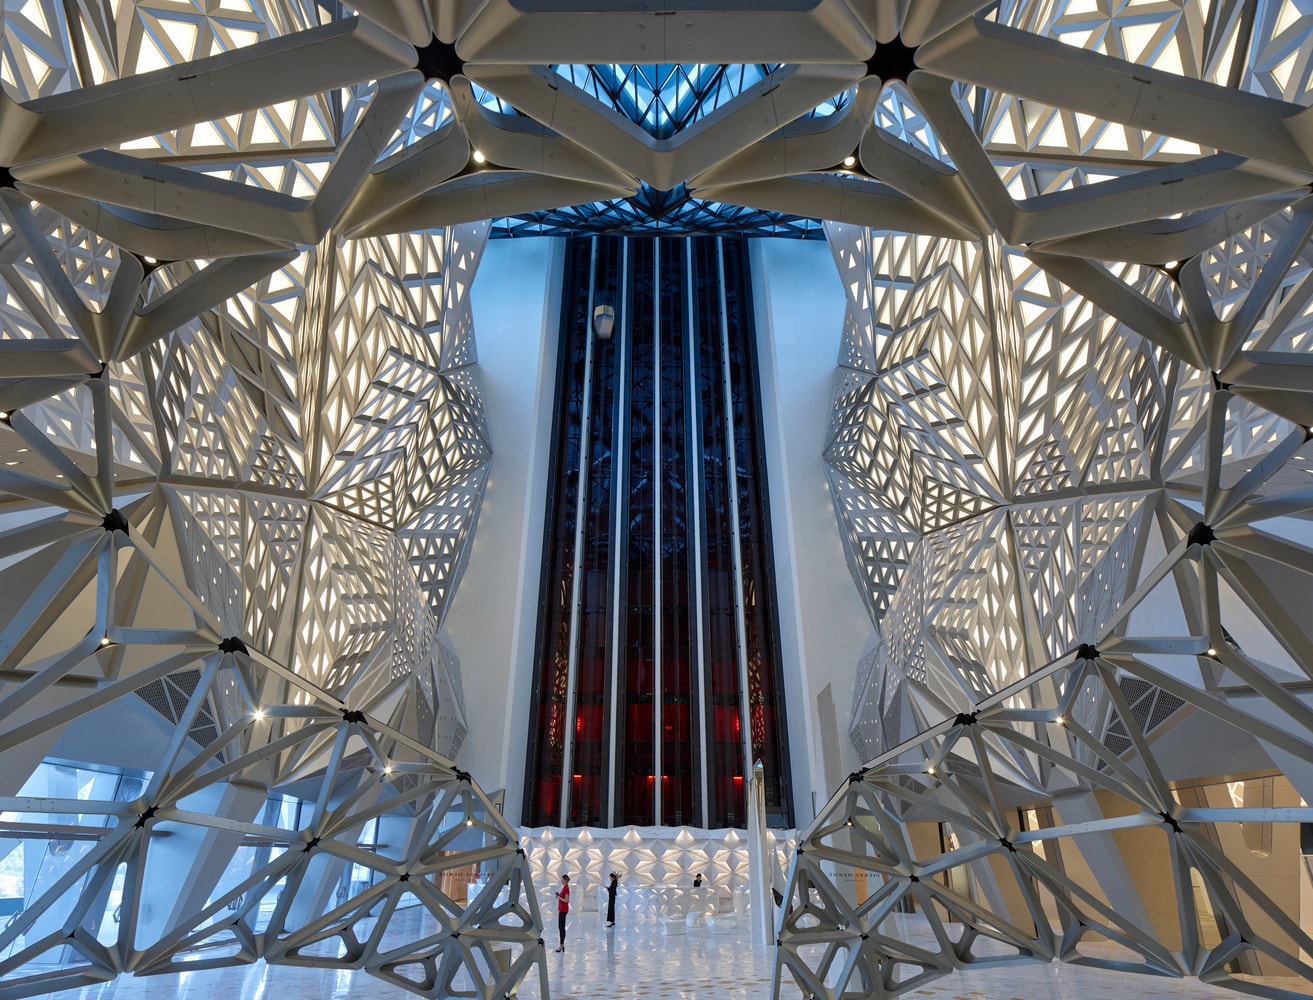 morpheus hotel zaha hadid macau cotai KAWS Interior Design First Look Opening City of Dreams